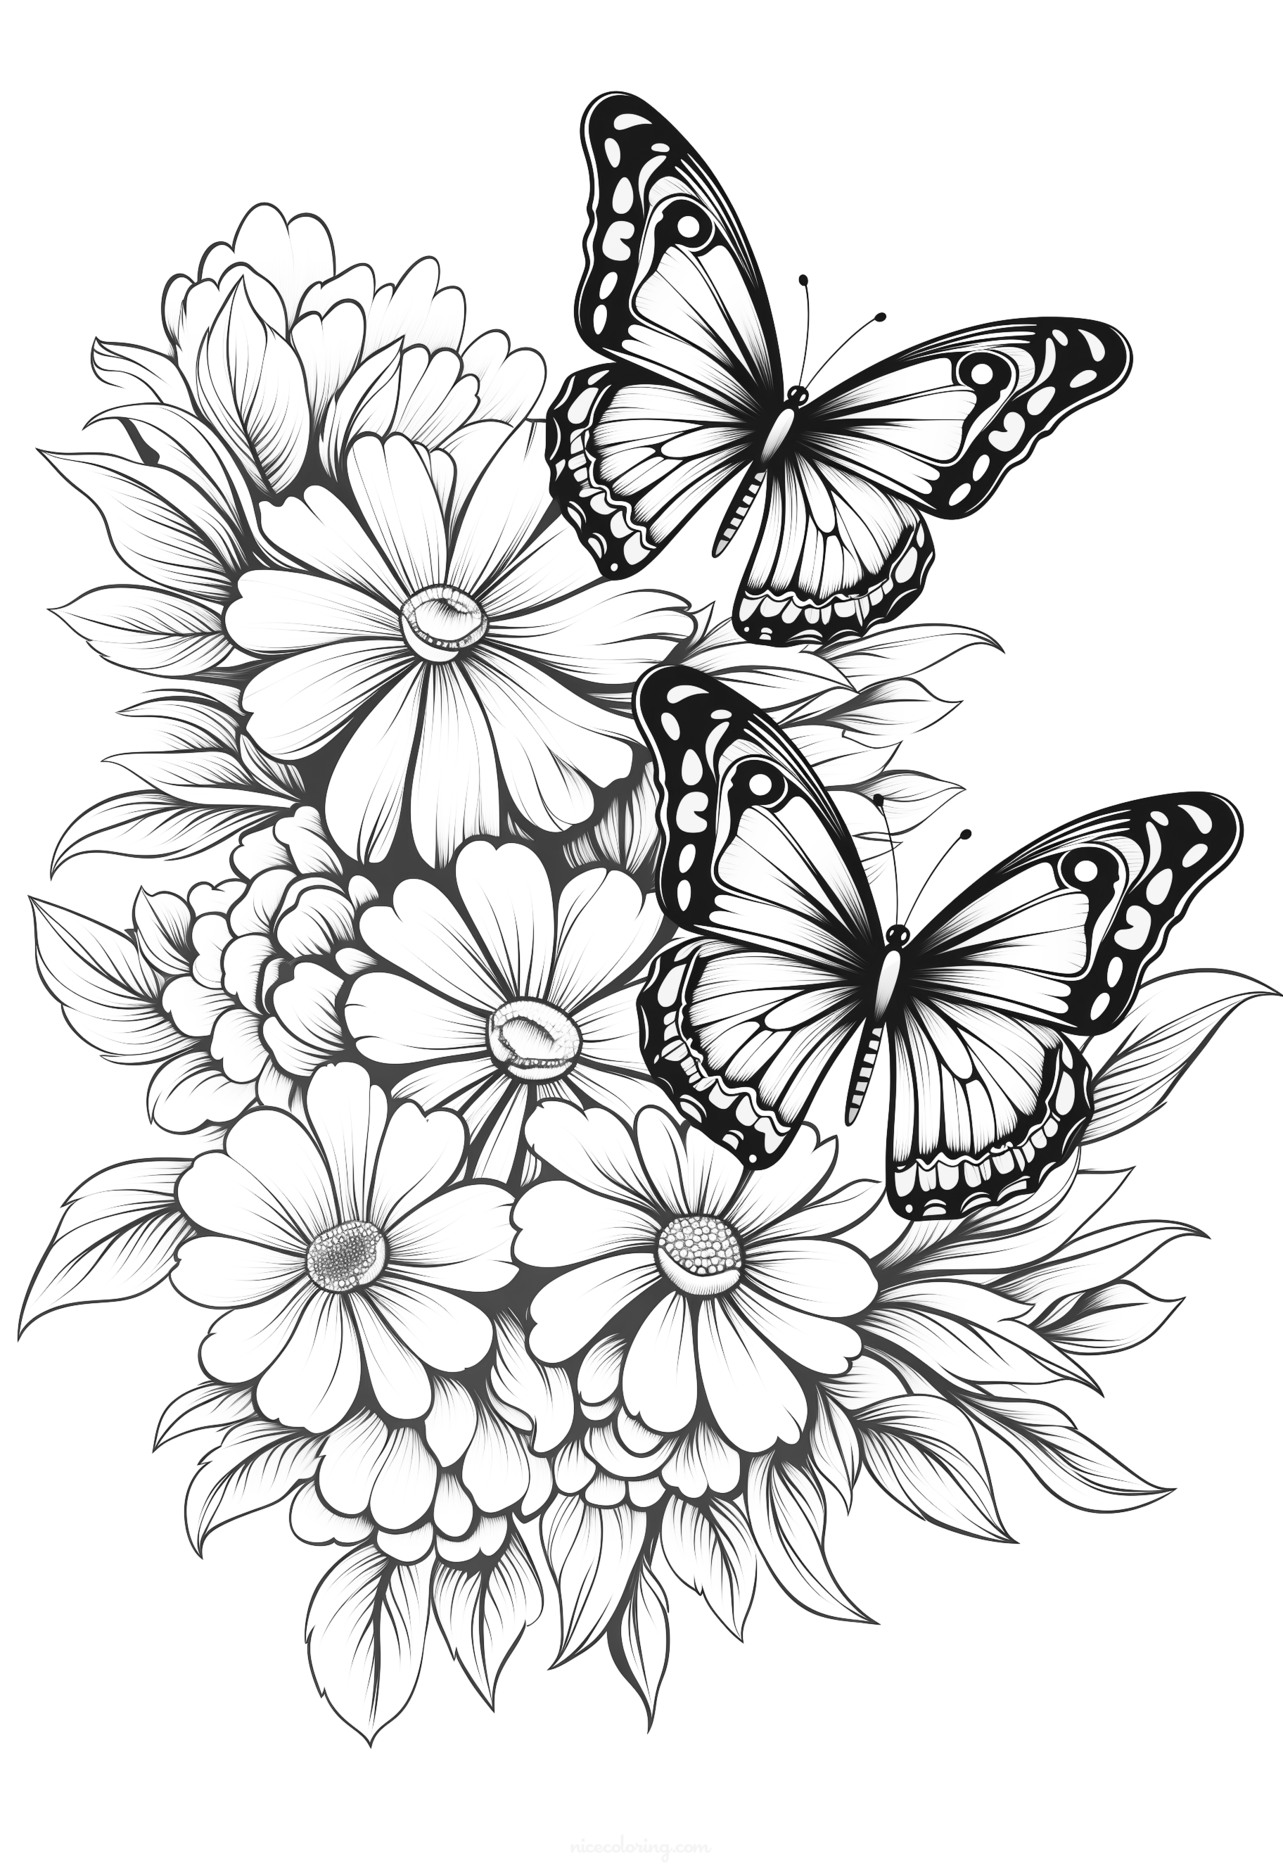 Página de colorir com borboleta de design complexo